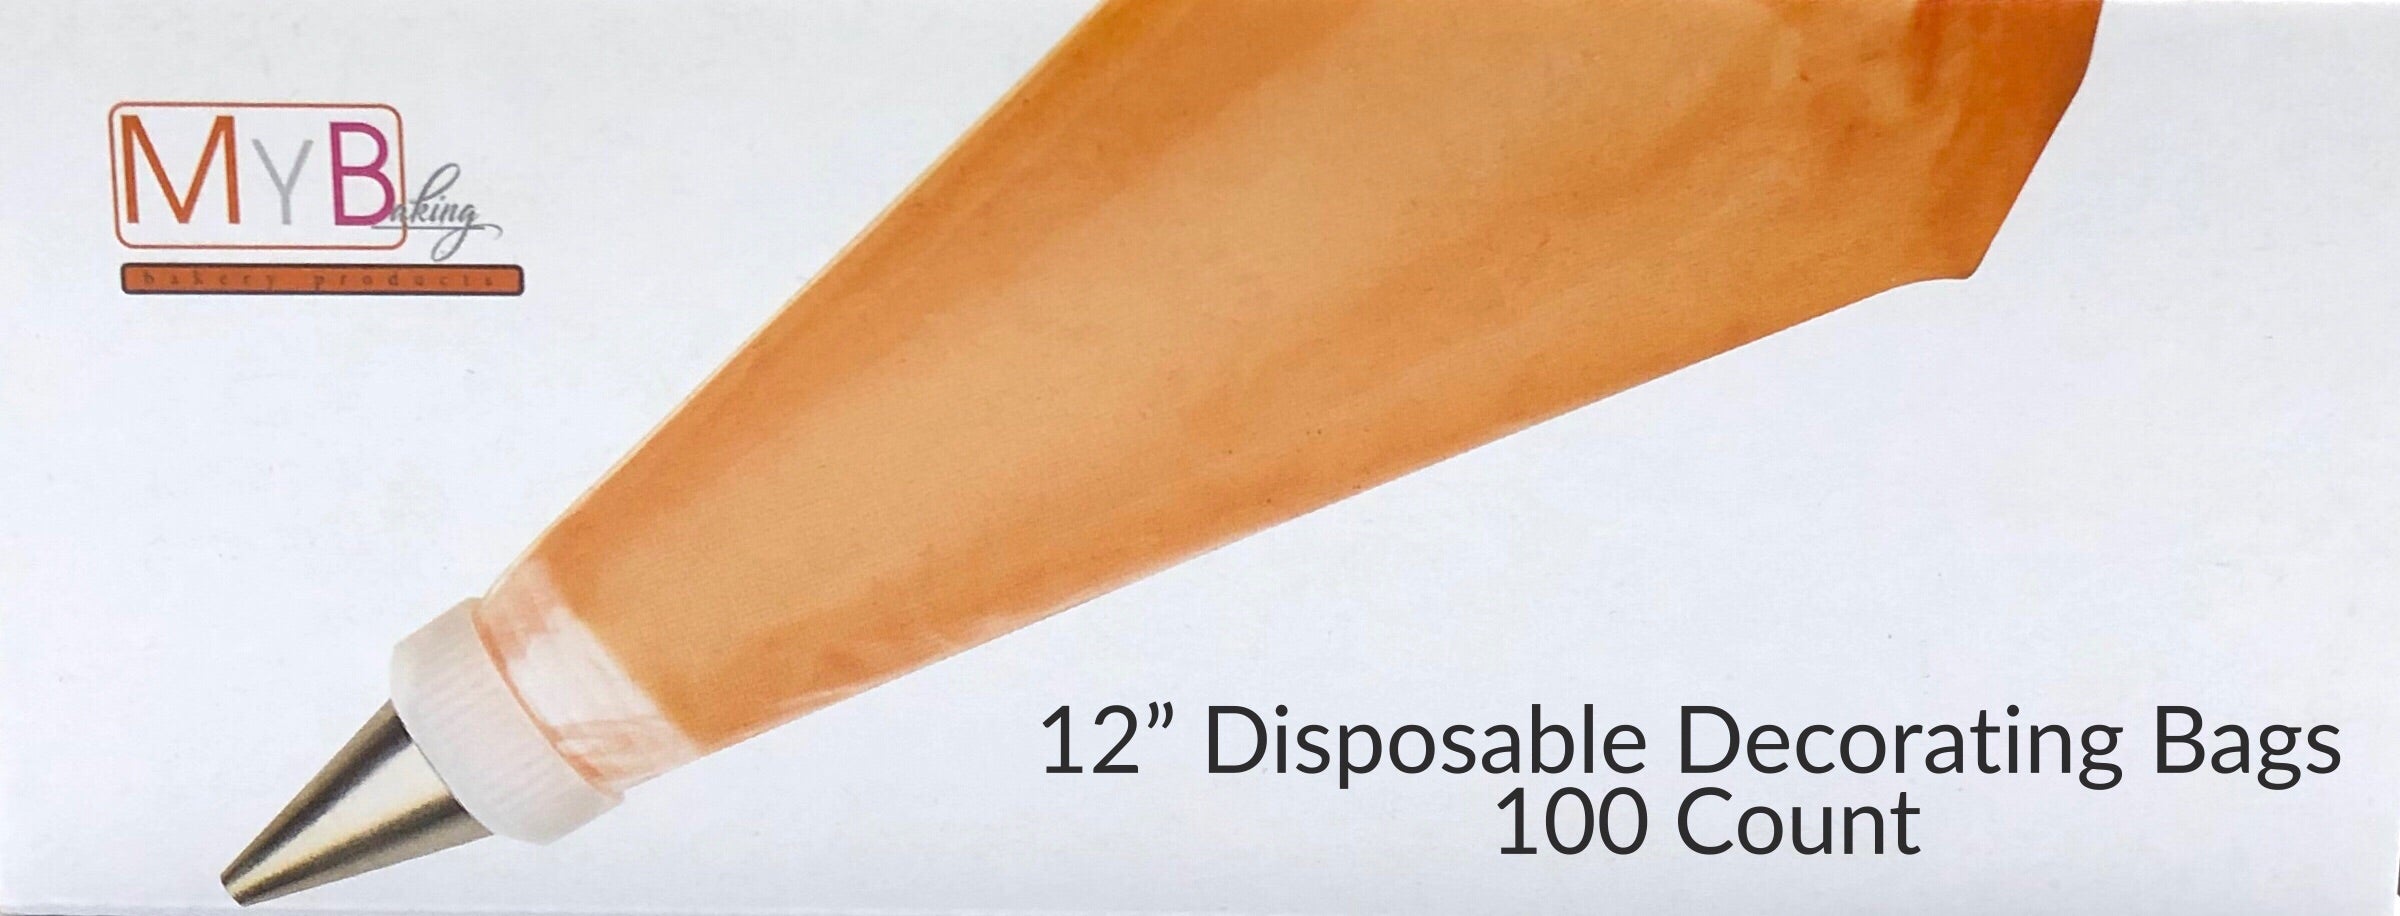 12" Disposable Decorating Bags 100pcs